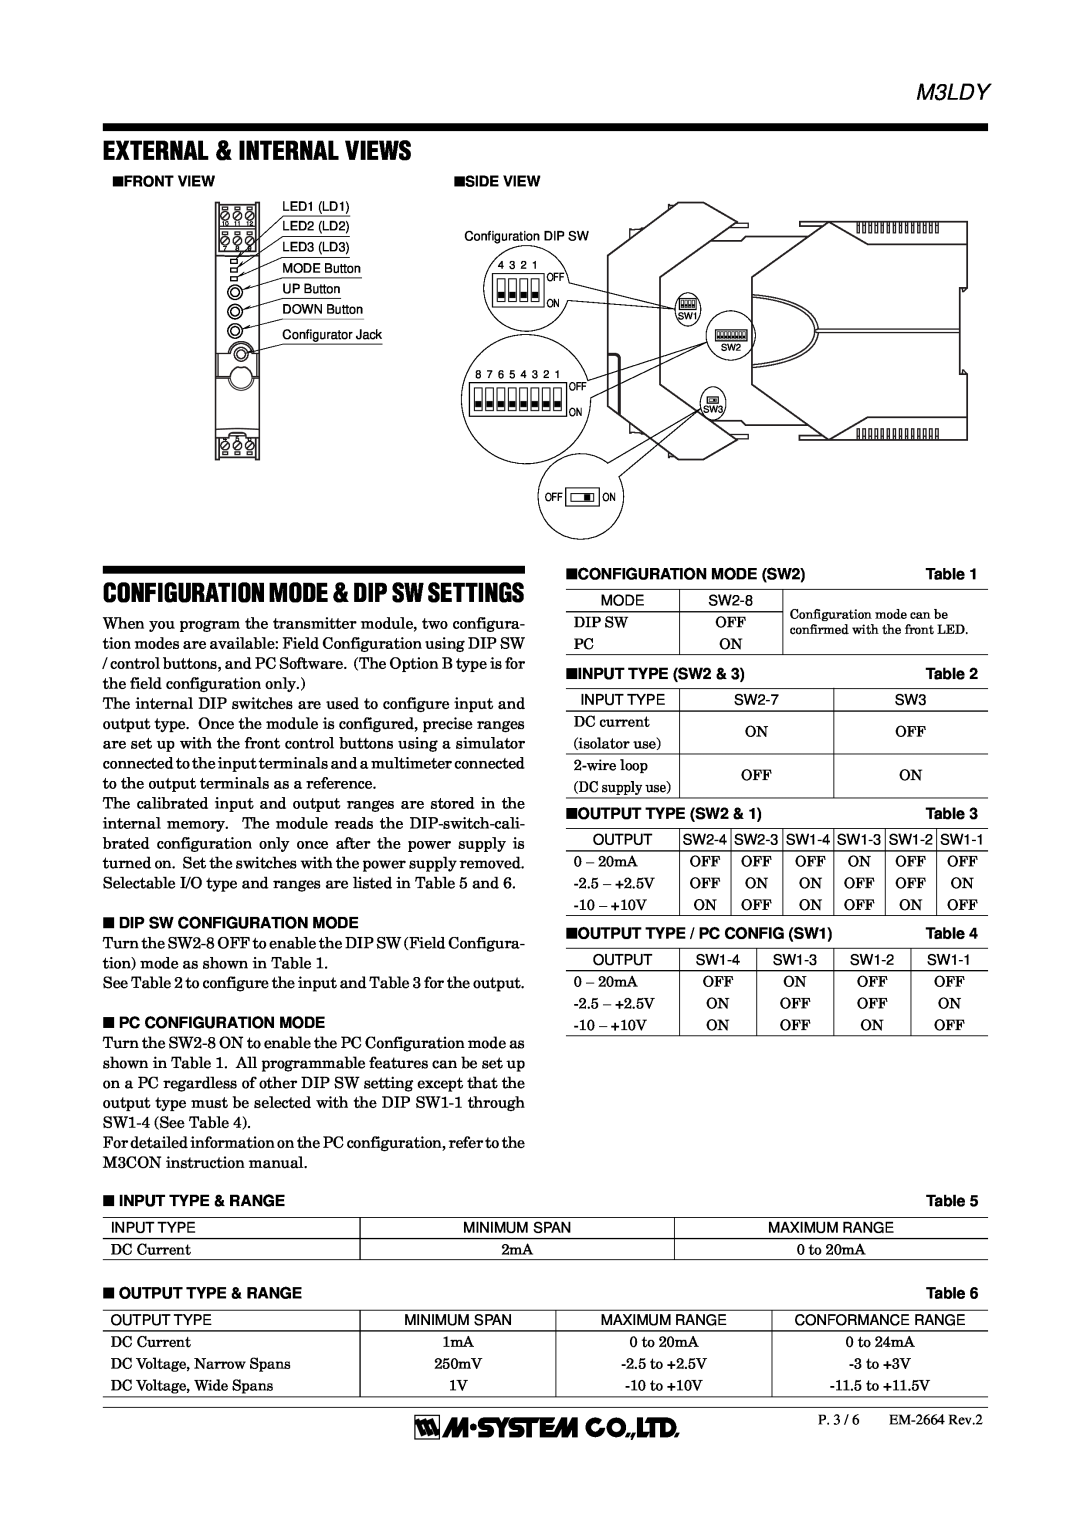 B&B Electronics M3LDY instruction manual External & Internal Views, Configuration Mode & Dip Sw Settings 